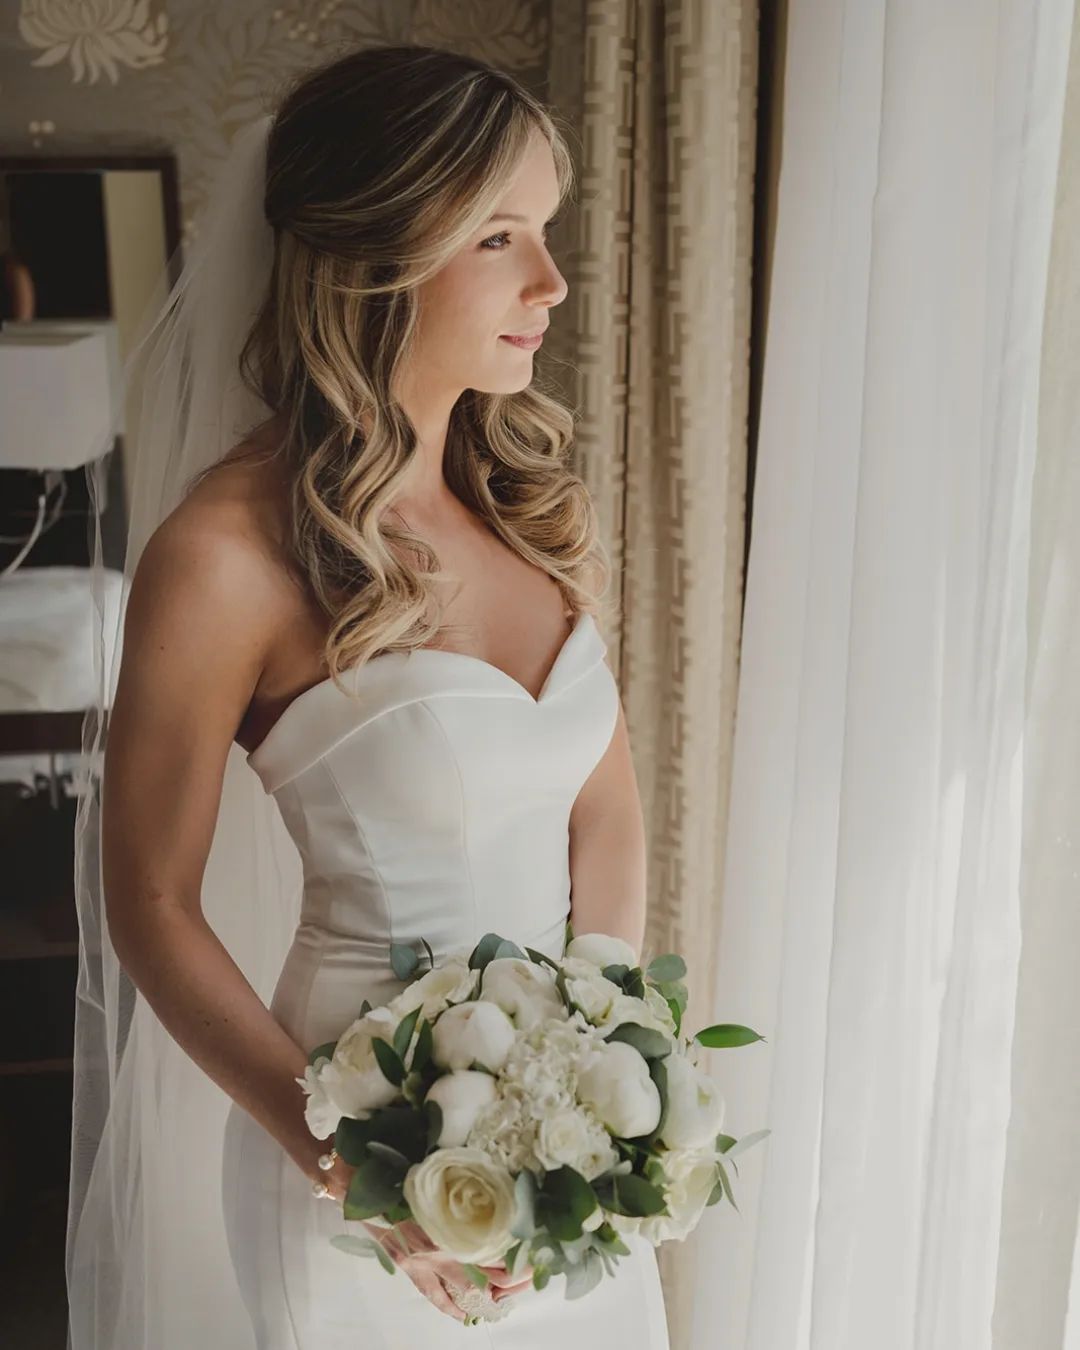 Luxe bridal makeup: Fresh & flawless enhancing brides natural stunning features  makeup